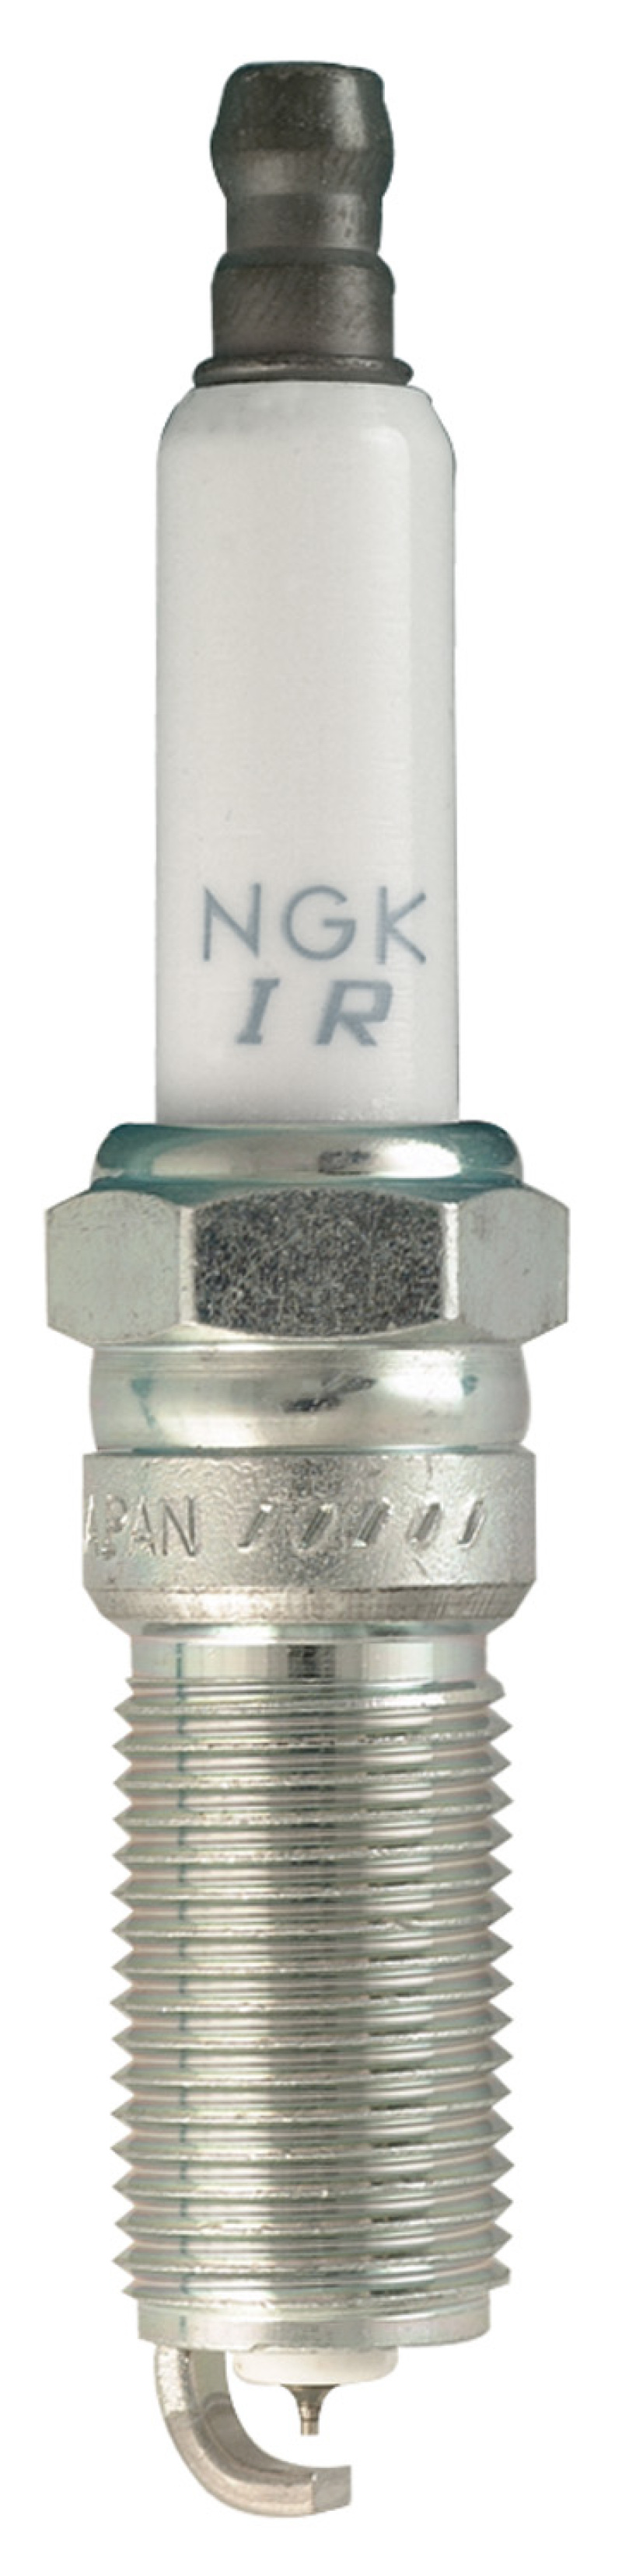 NGK Laser Iridium Spark Plug Box of 4 (LTR6CI-8) - 97177